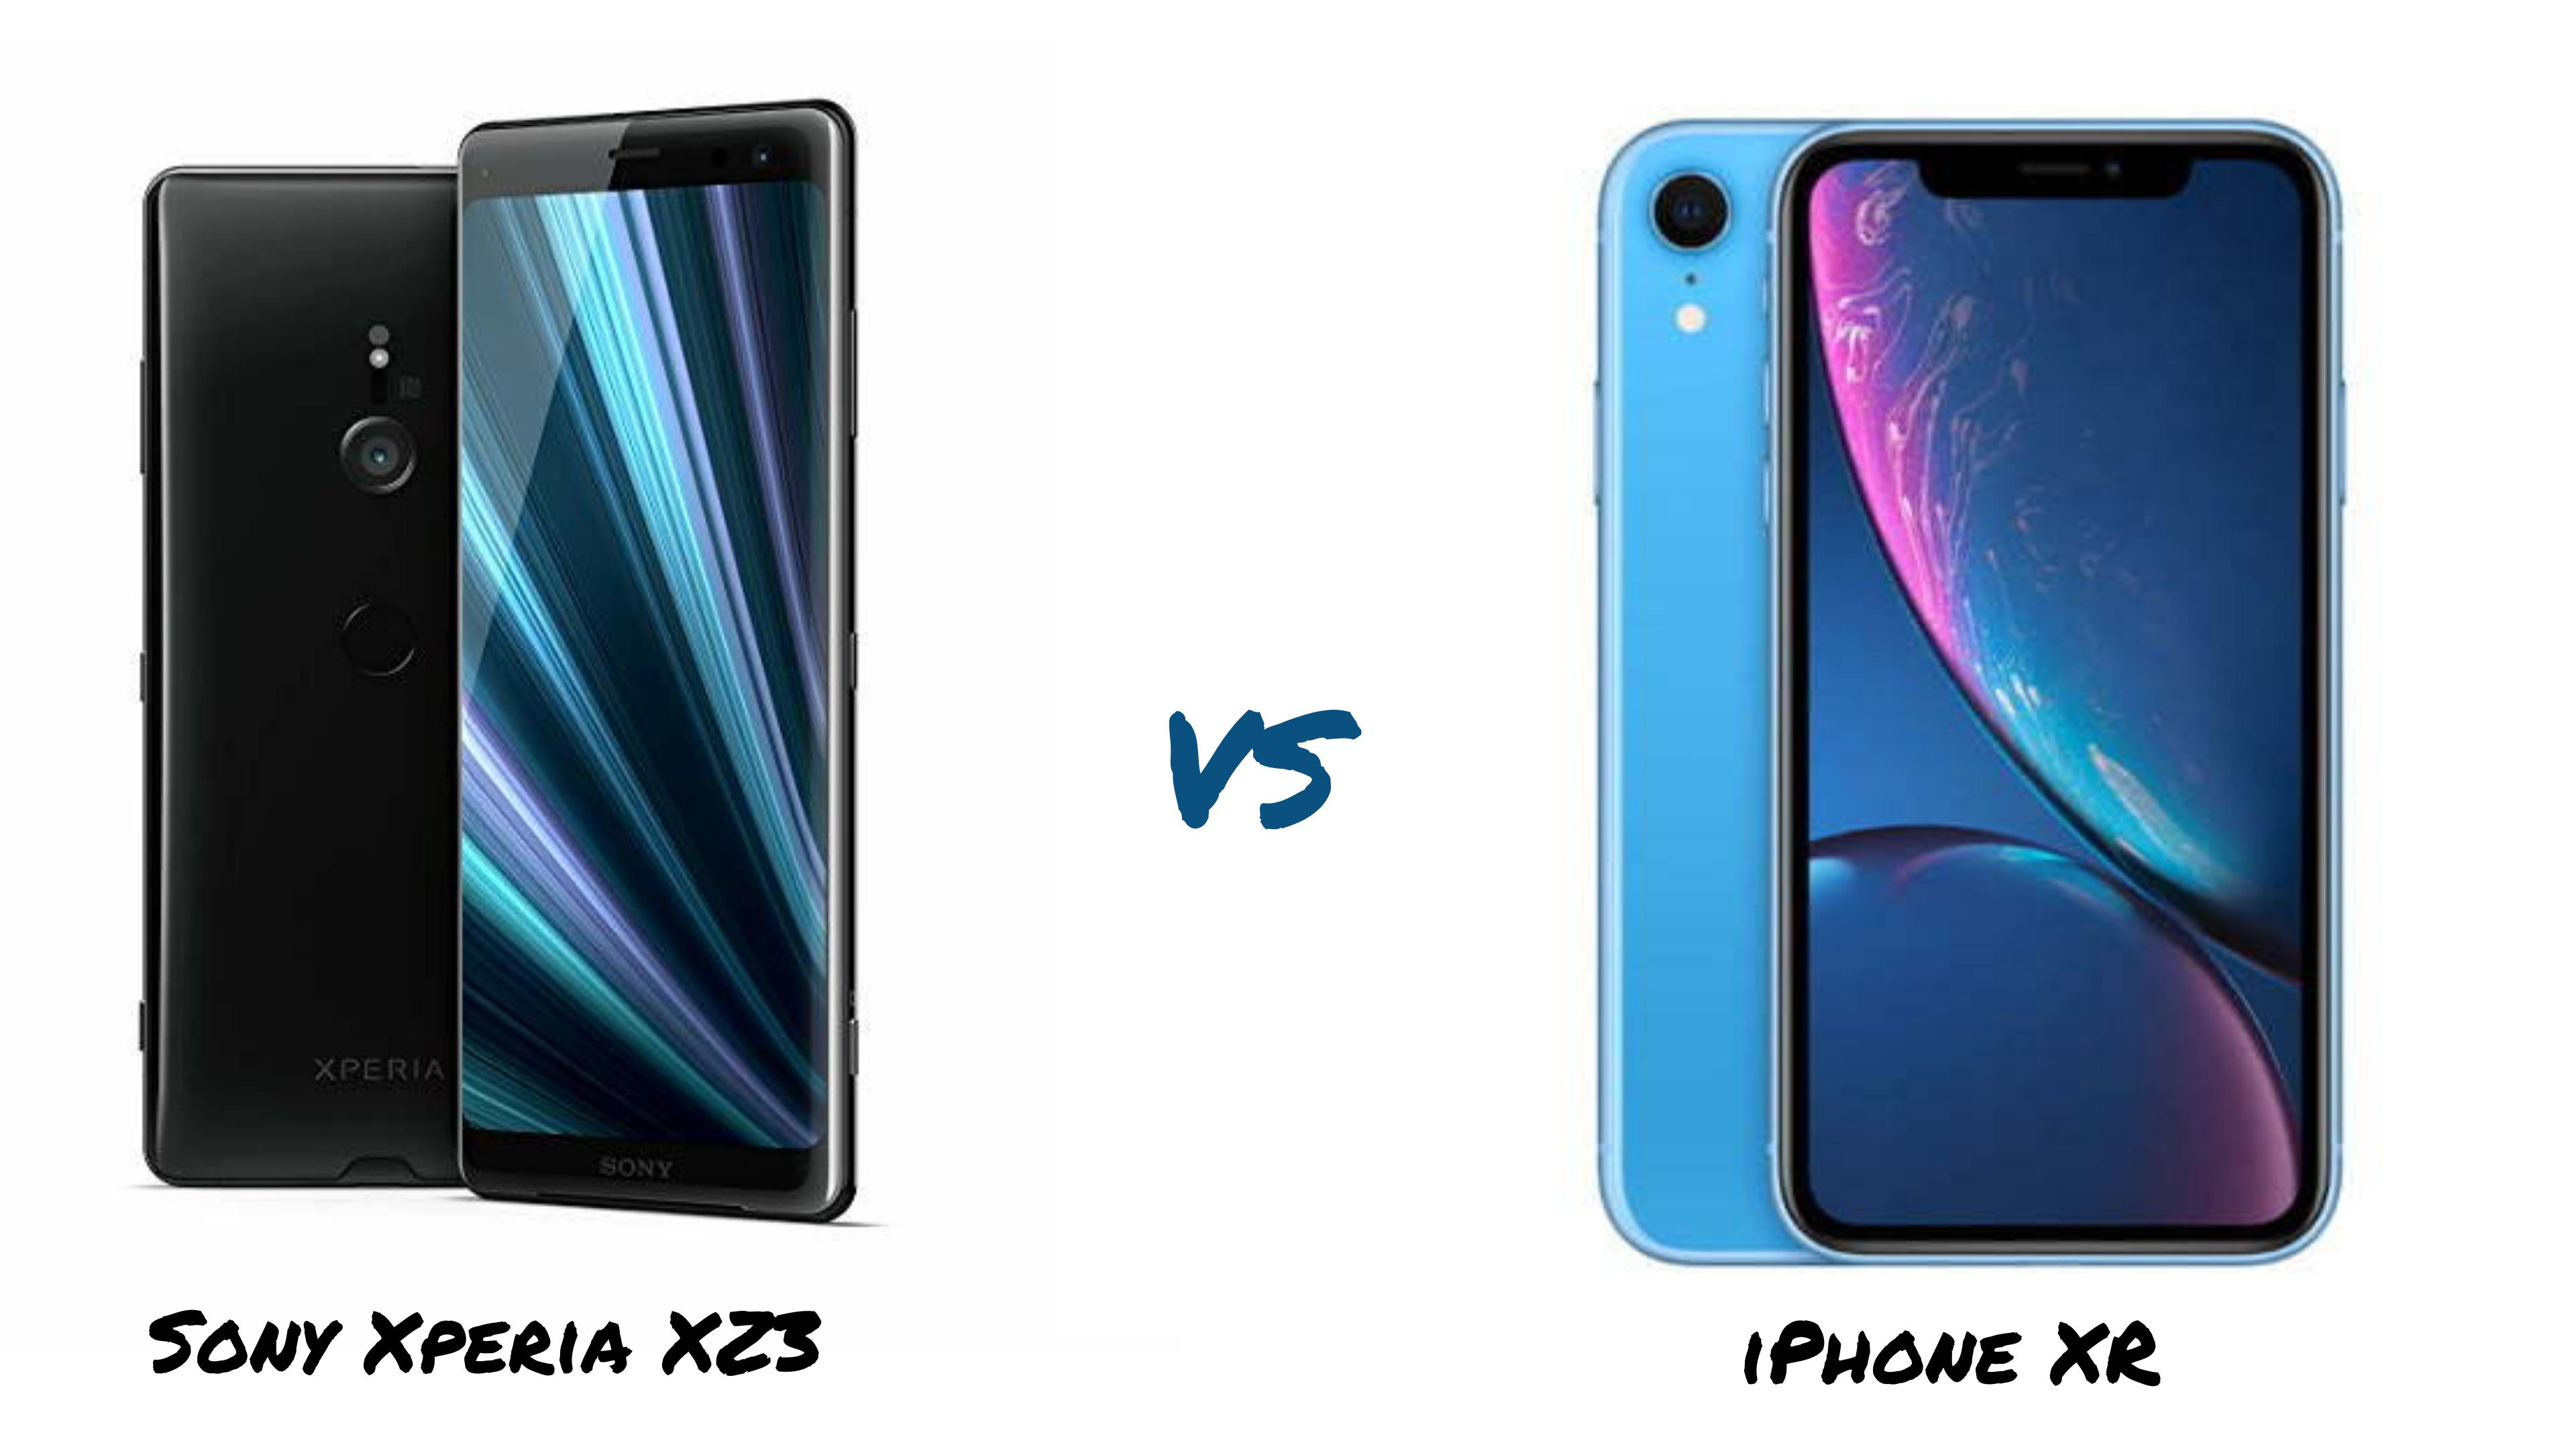 Sony Xperia XZ3 vs iPhone XR